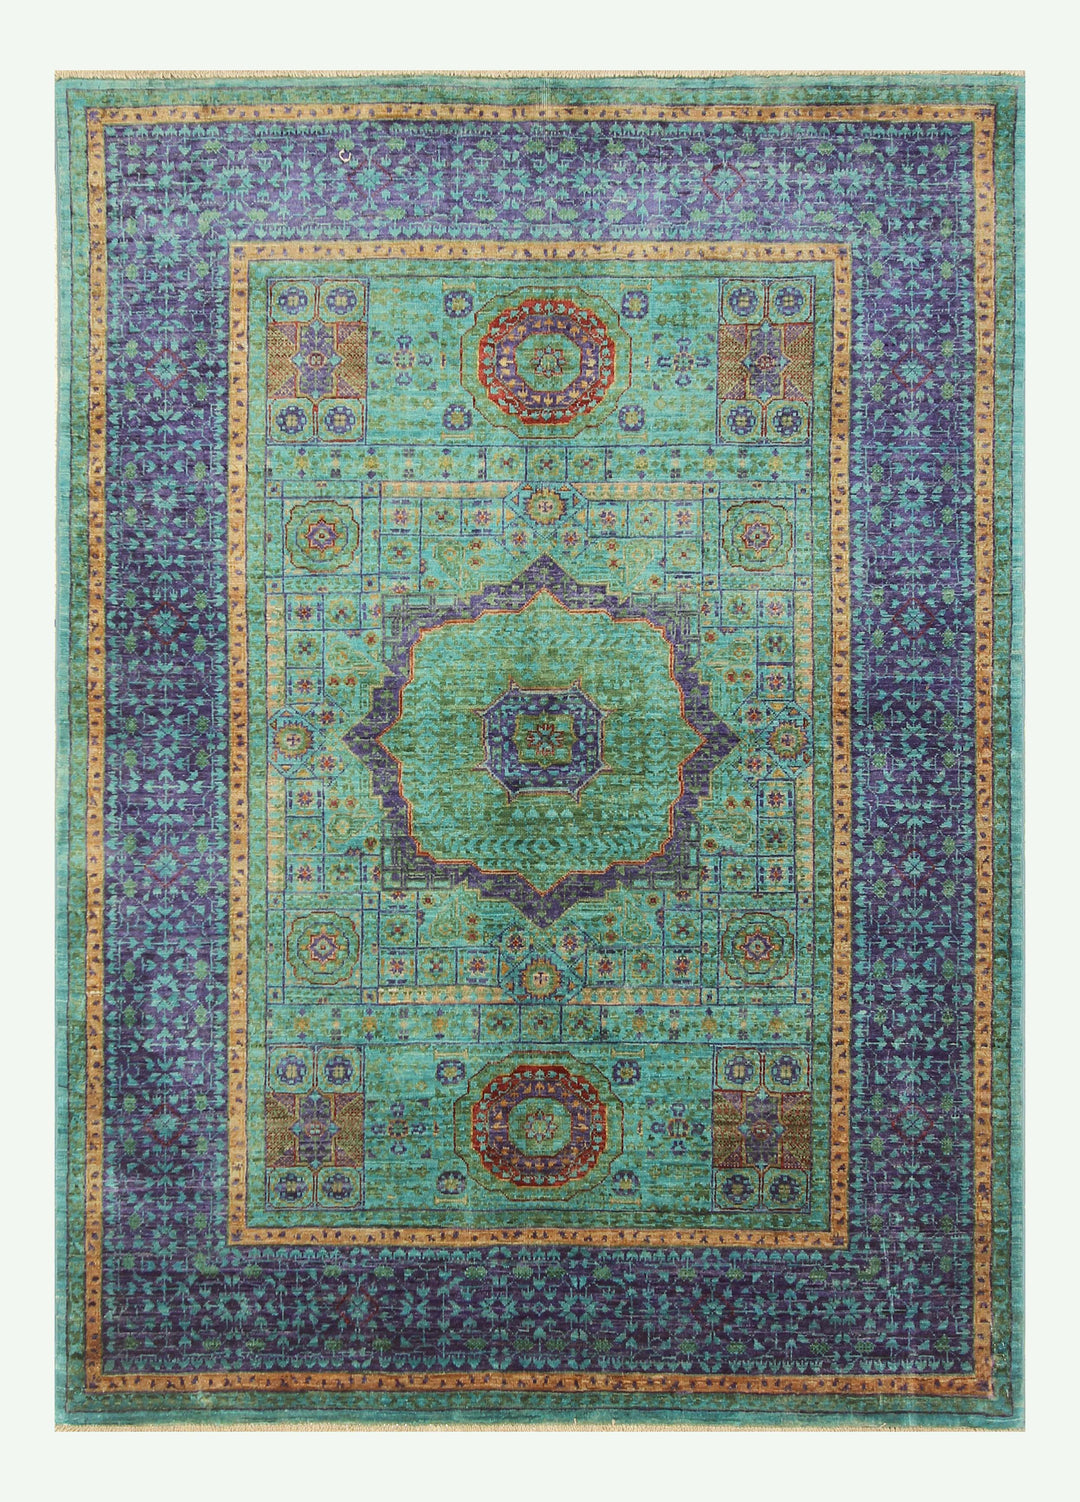 4'3" x 6' Turquoise Blue Green Mamluk Super Fine Hand knotted Turkish Rug - Yildiz Rugs